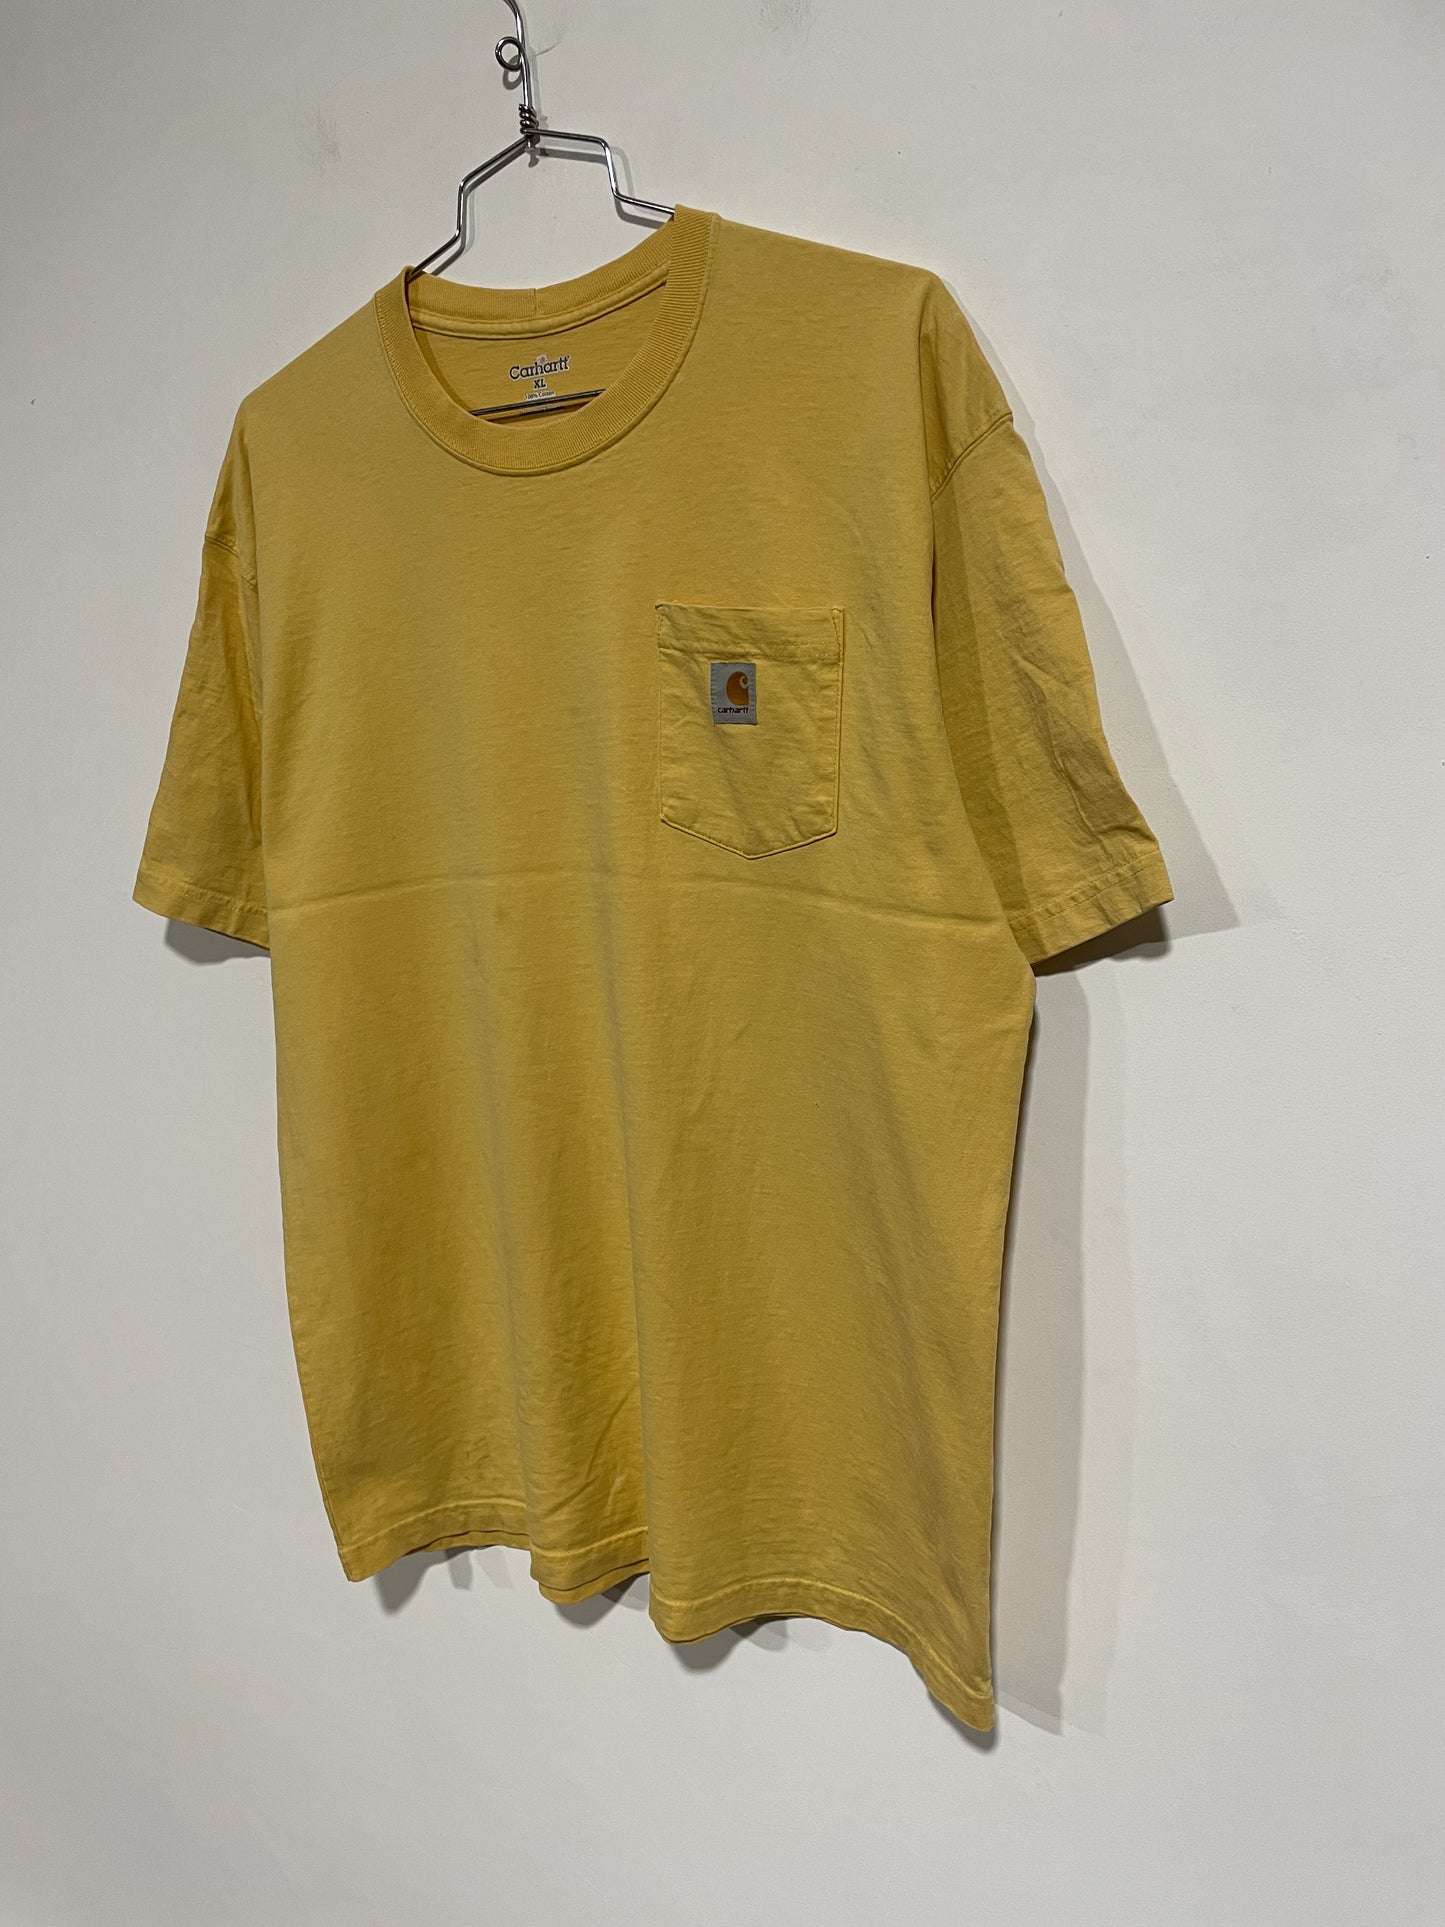 T shirt Carhartt workwear (MR126)